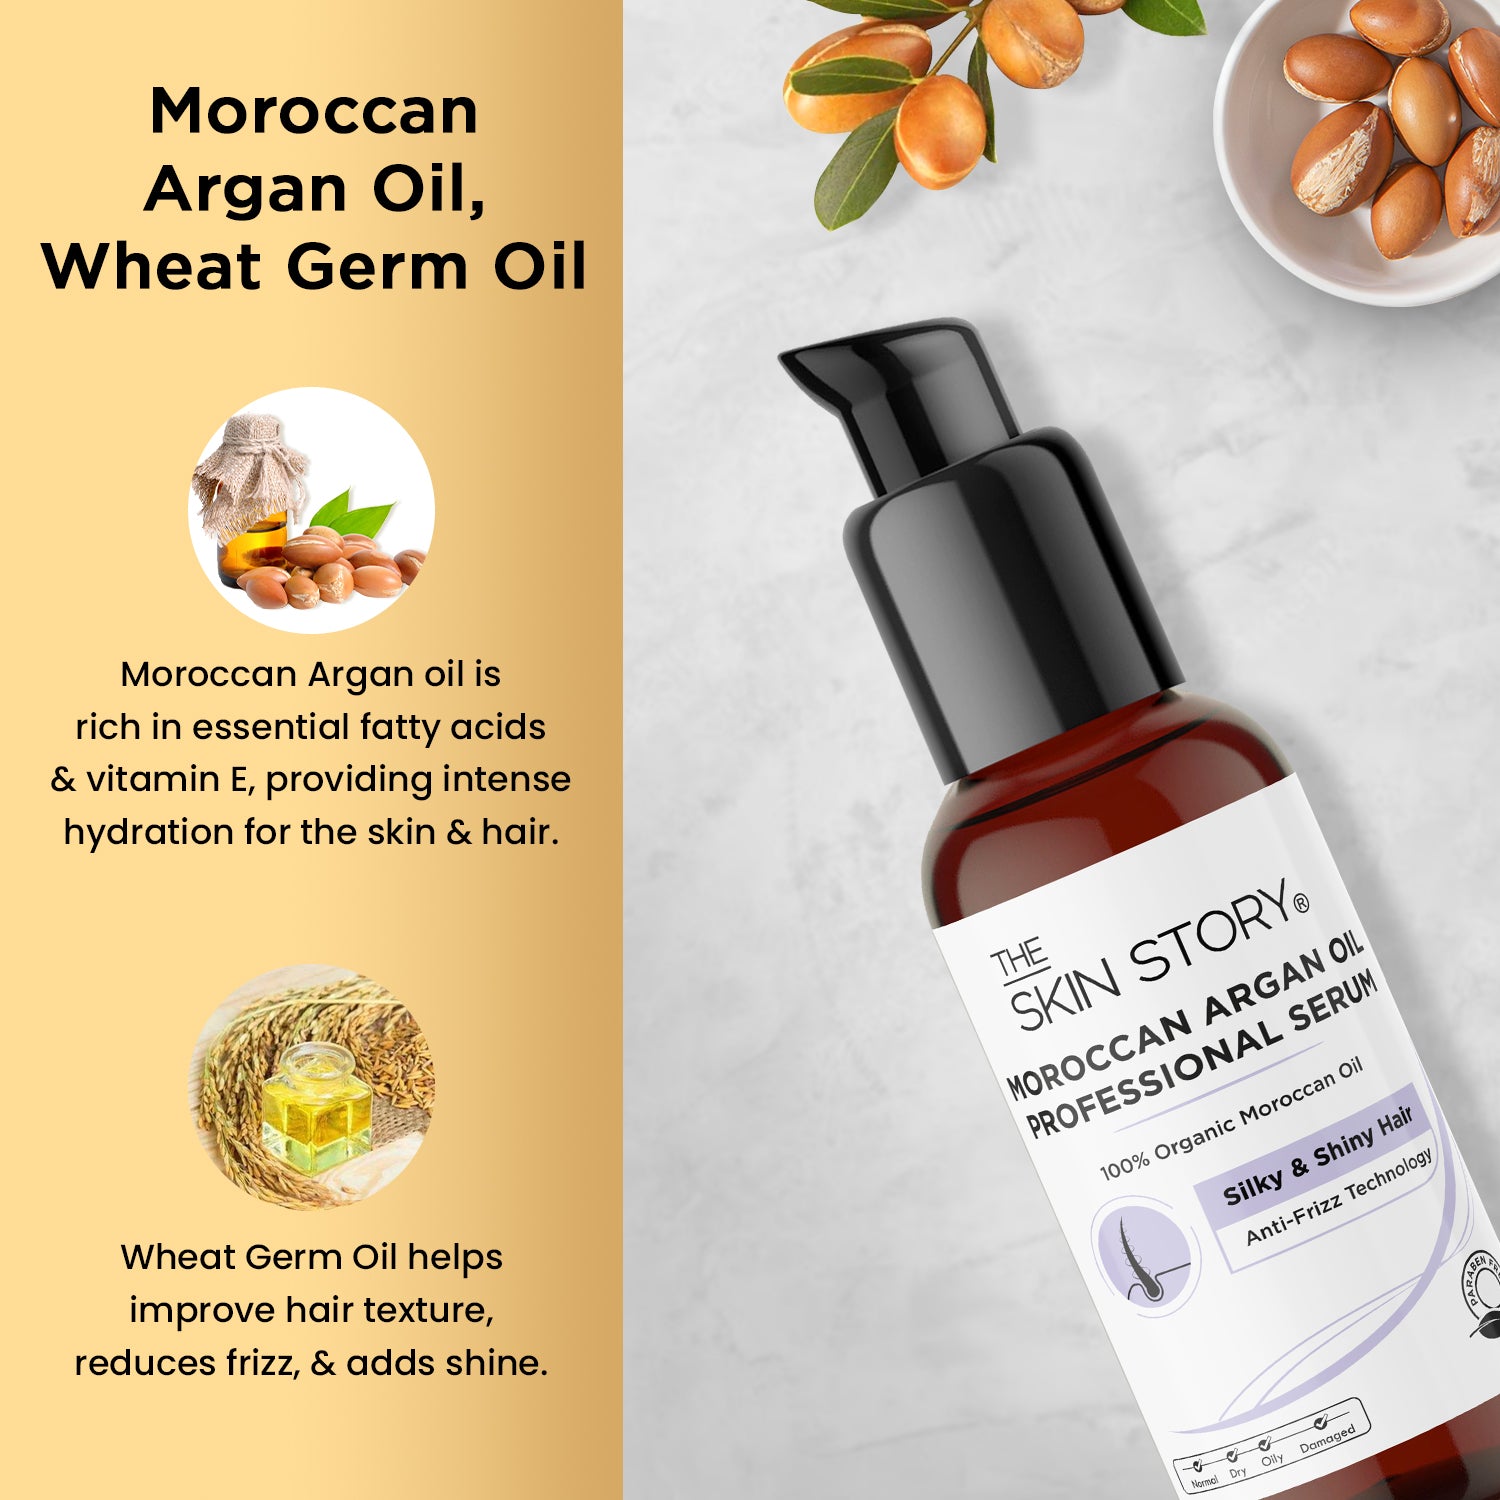 The Skin Story Moroccan Argan Oil Professional Serum, 40ml